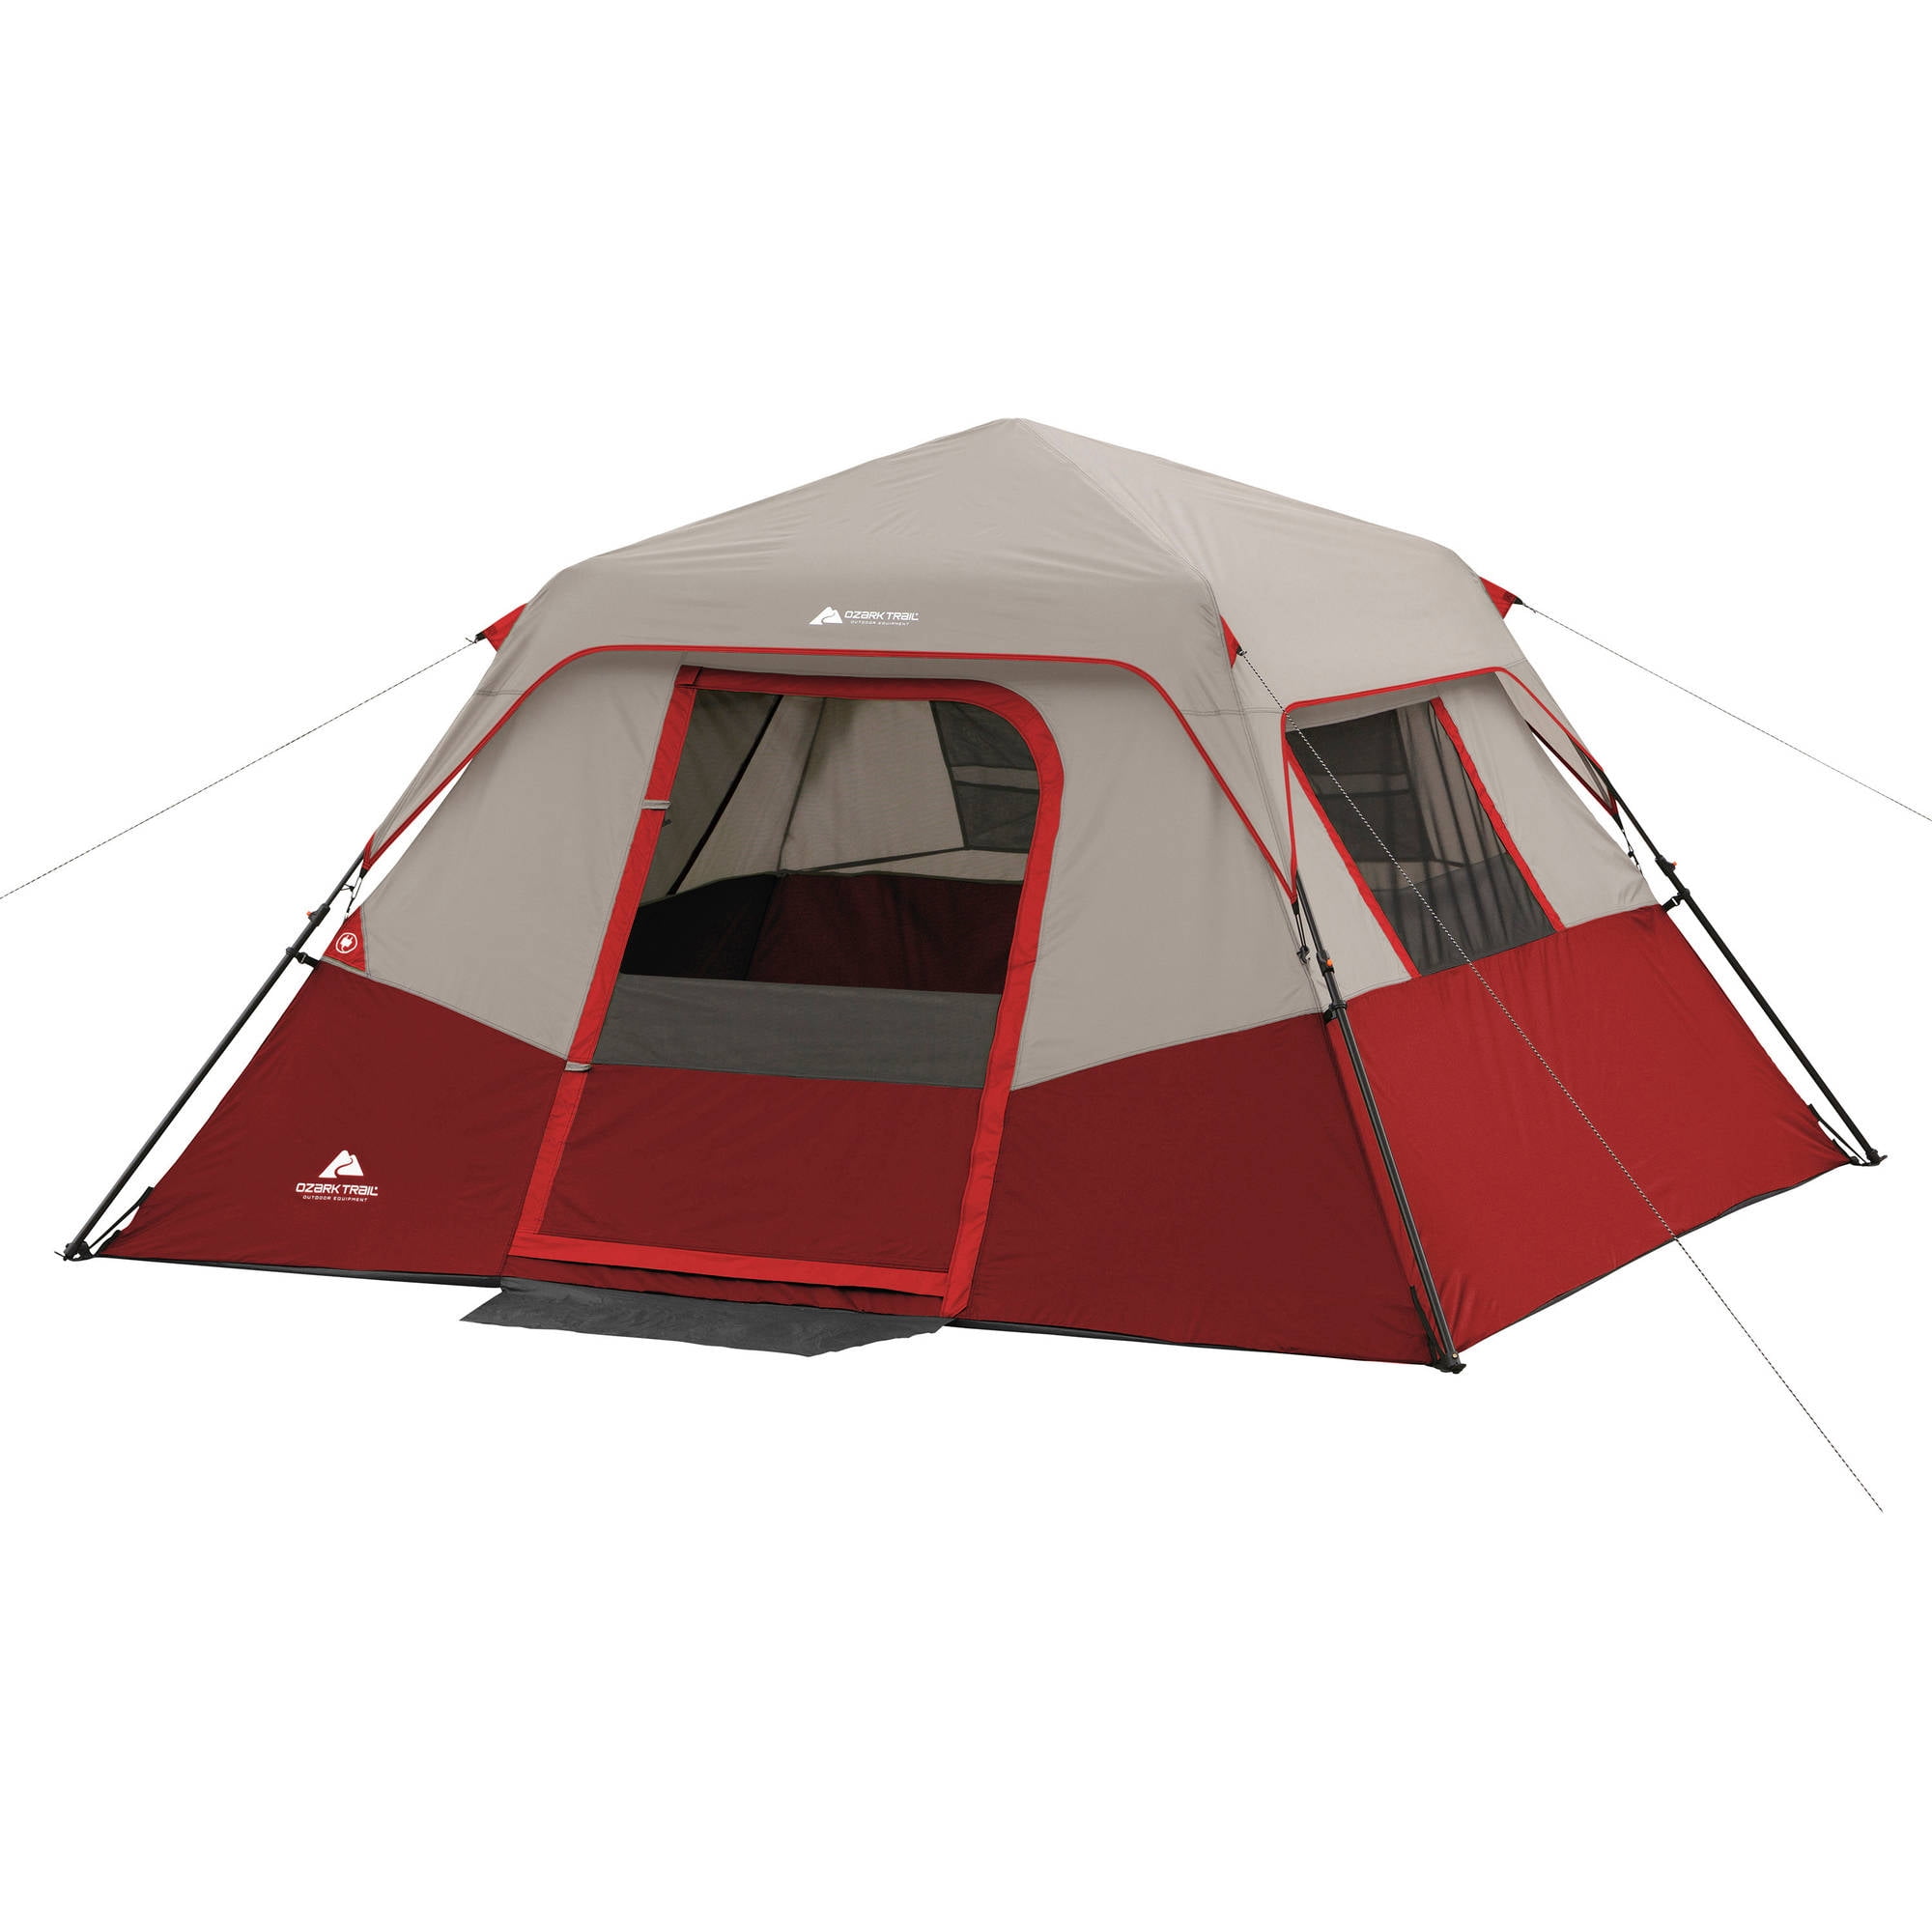 Ozark Trail 6 Person Instant Cabin Tent - Walmart.com ...